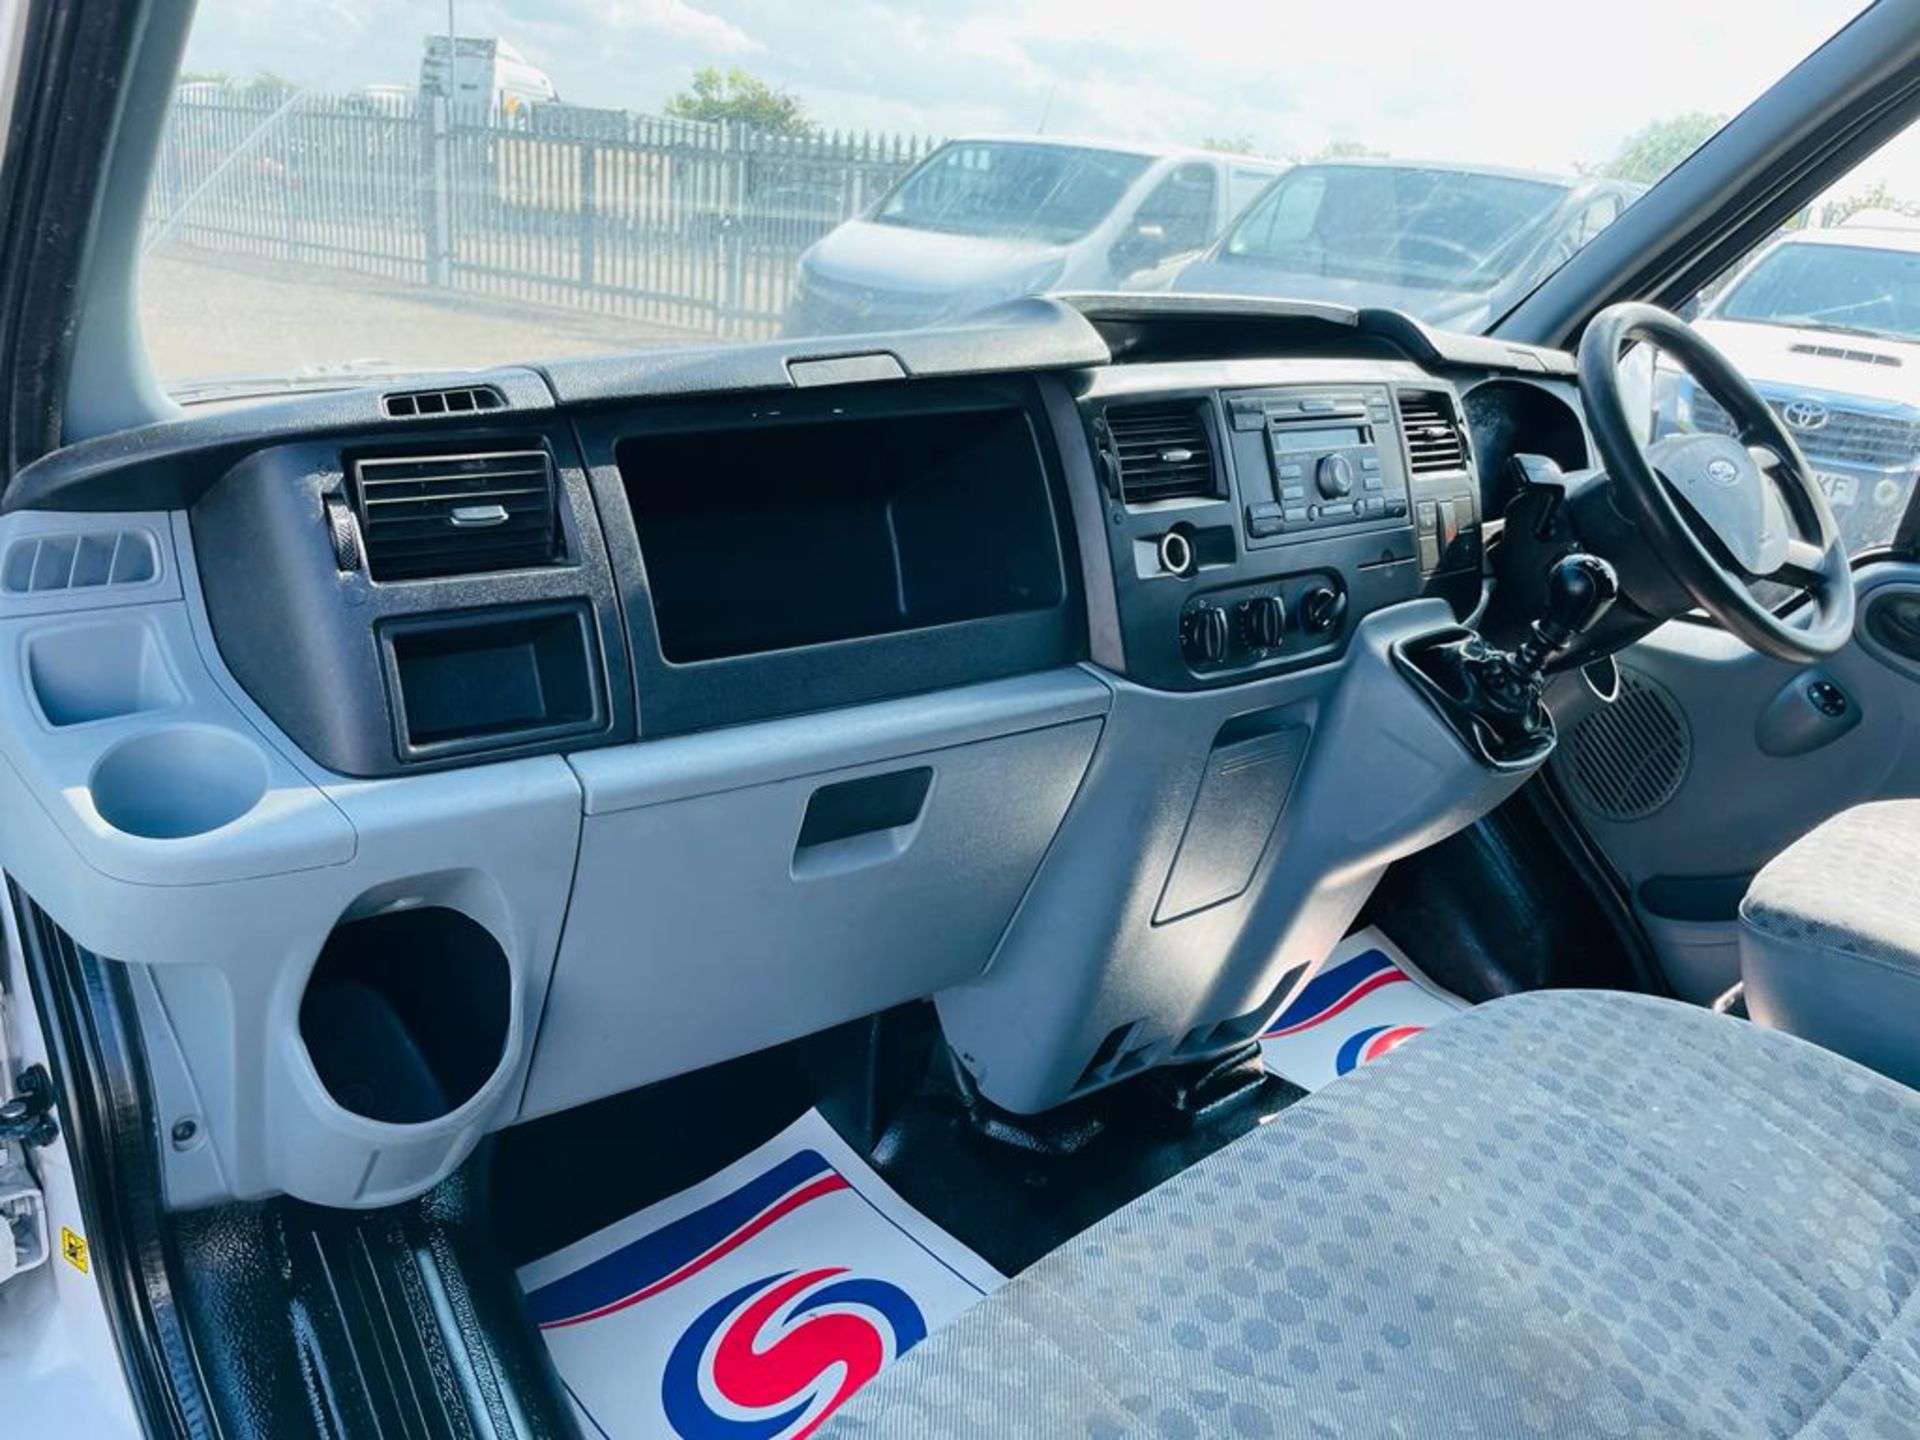 ** ON SALE ** Ford Transit 2.2 TDCI L1 H1 2012 ‘12 Reg’ Short wheel base - Panel Van - Image 20 of 24